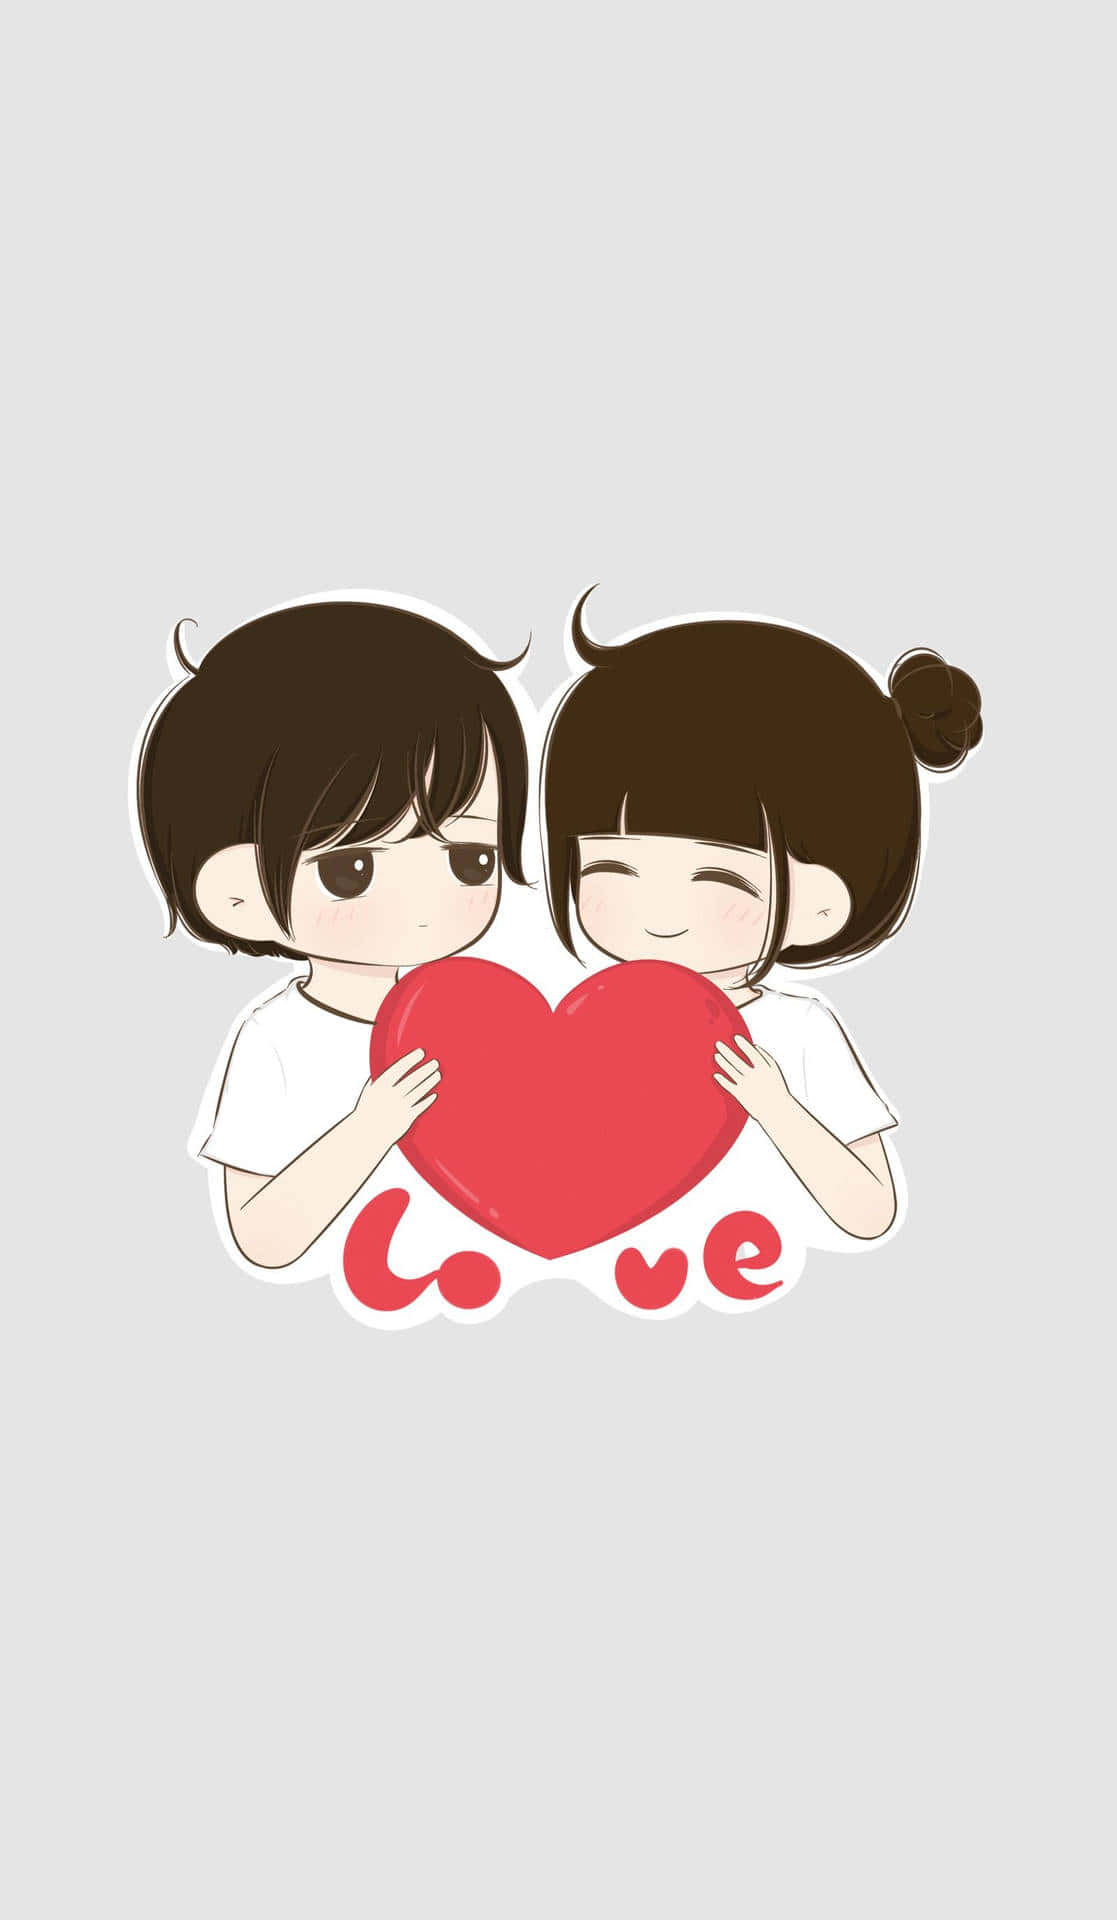 Cute Cartoon Heart embracing love Wallpaper